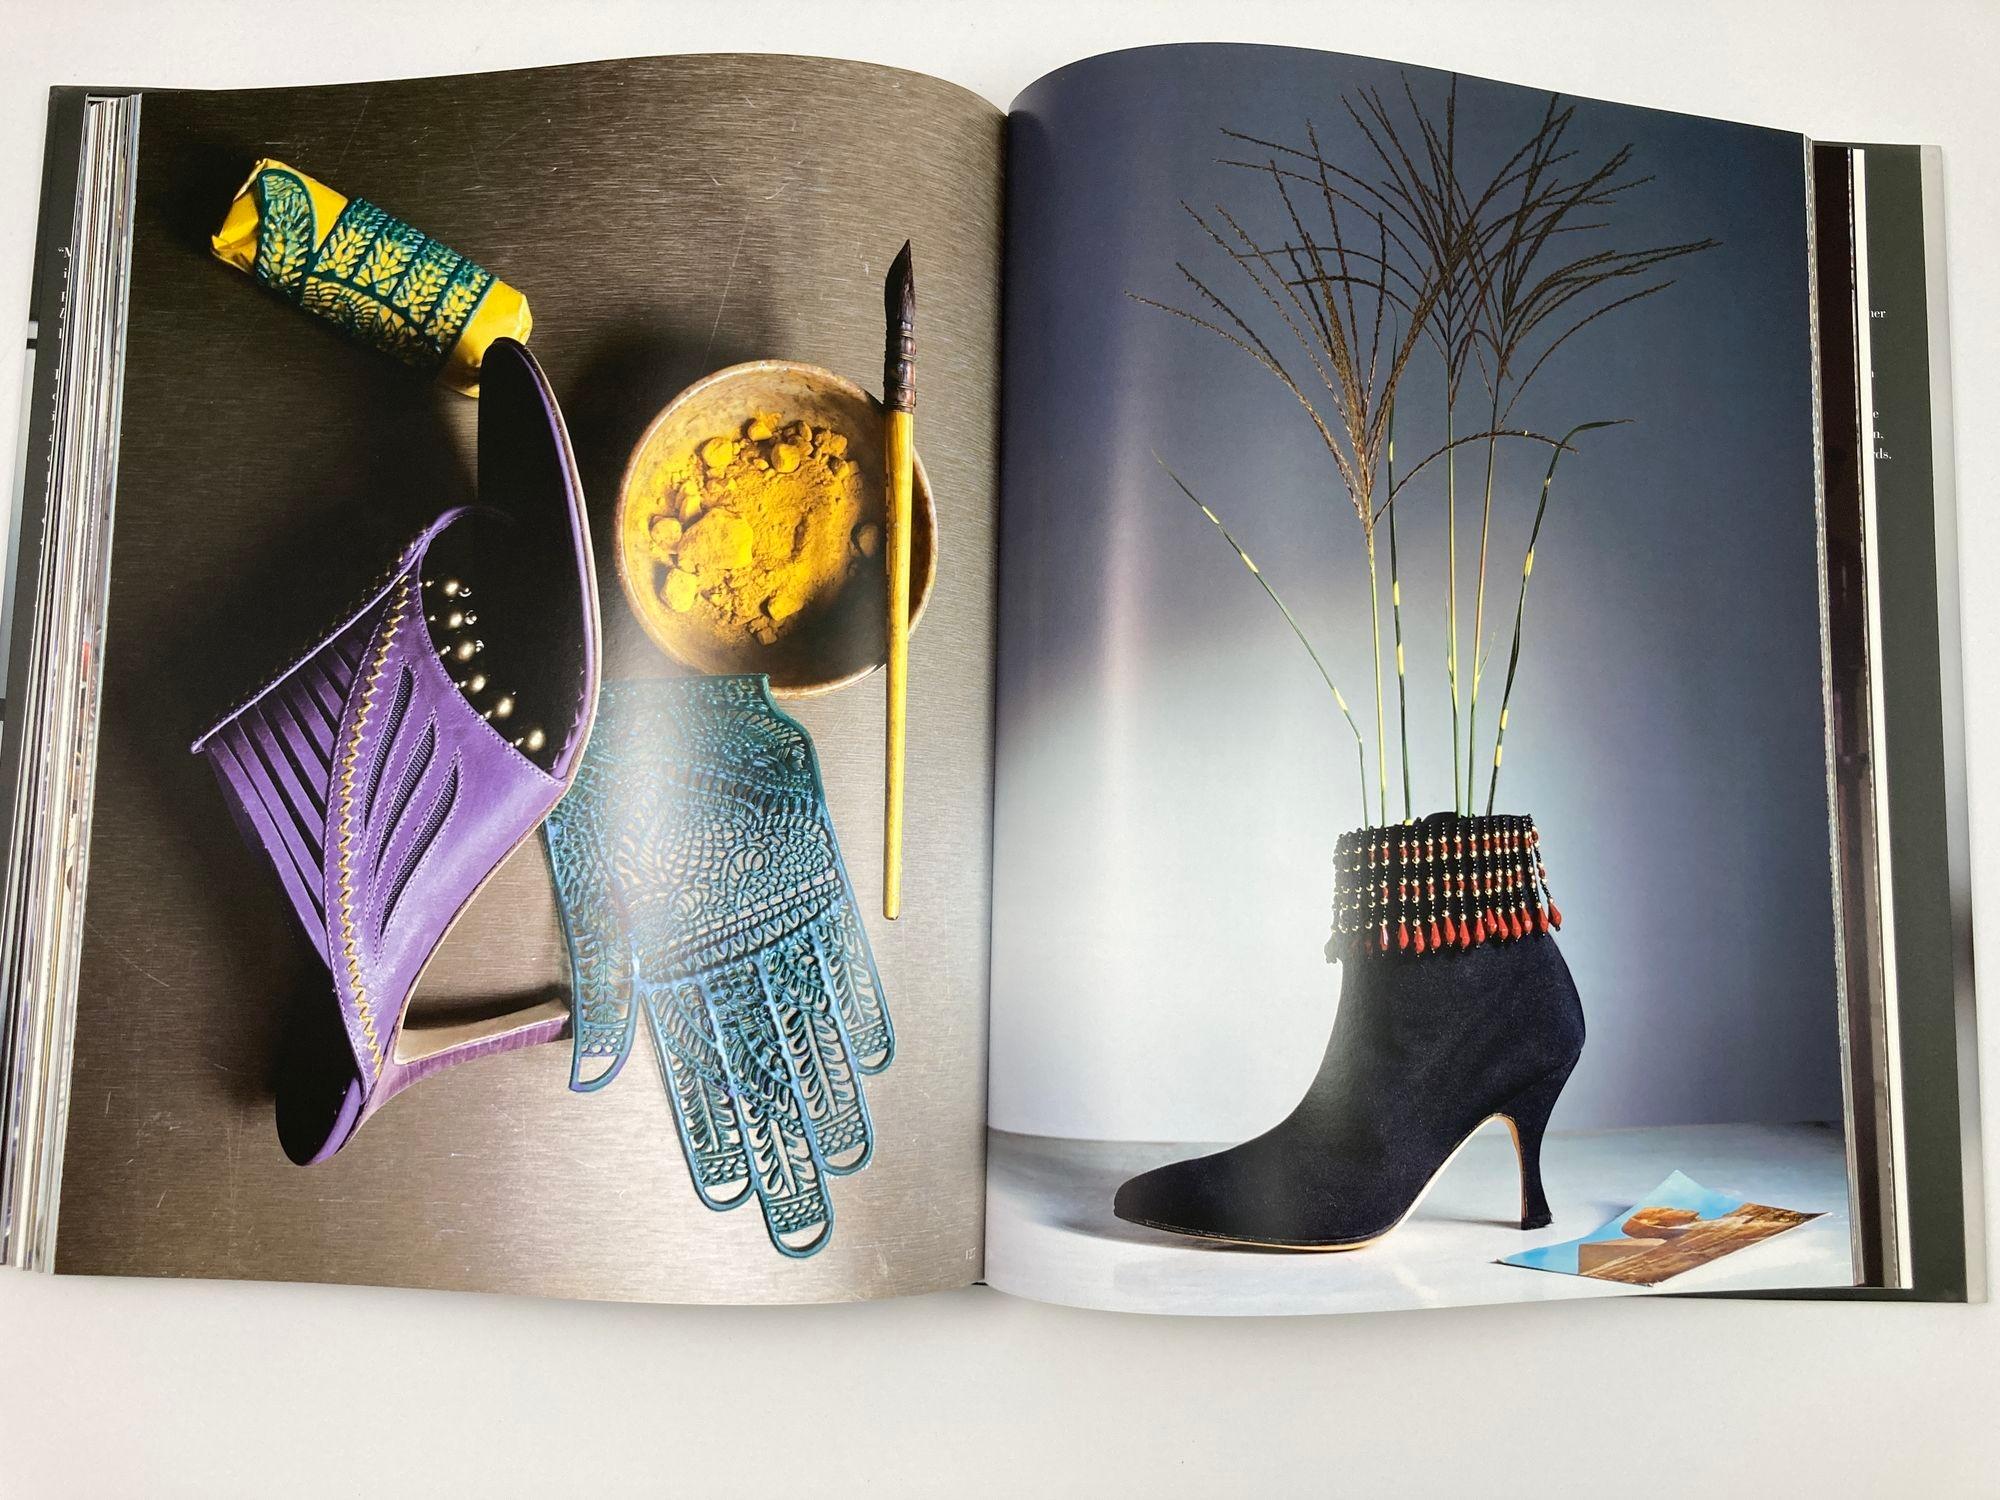 Blahnik by Boman: Shoes, Photographs, ConversationLarge Coffee Table Book 5